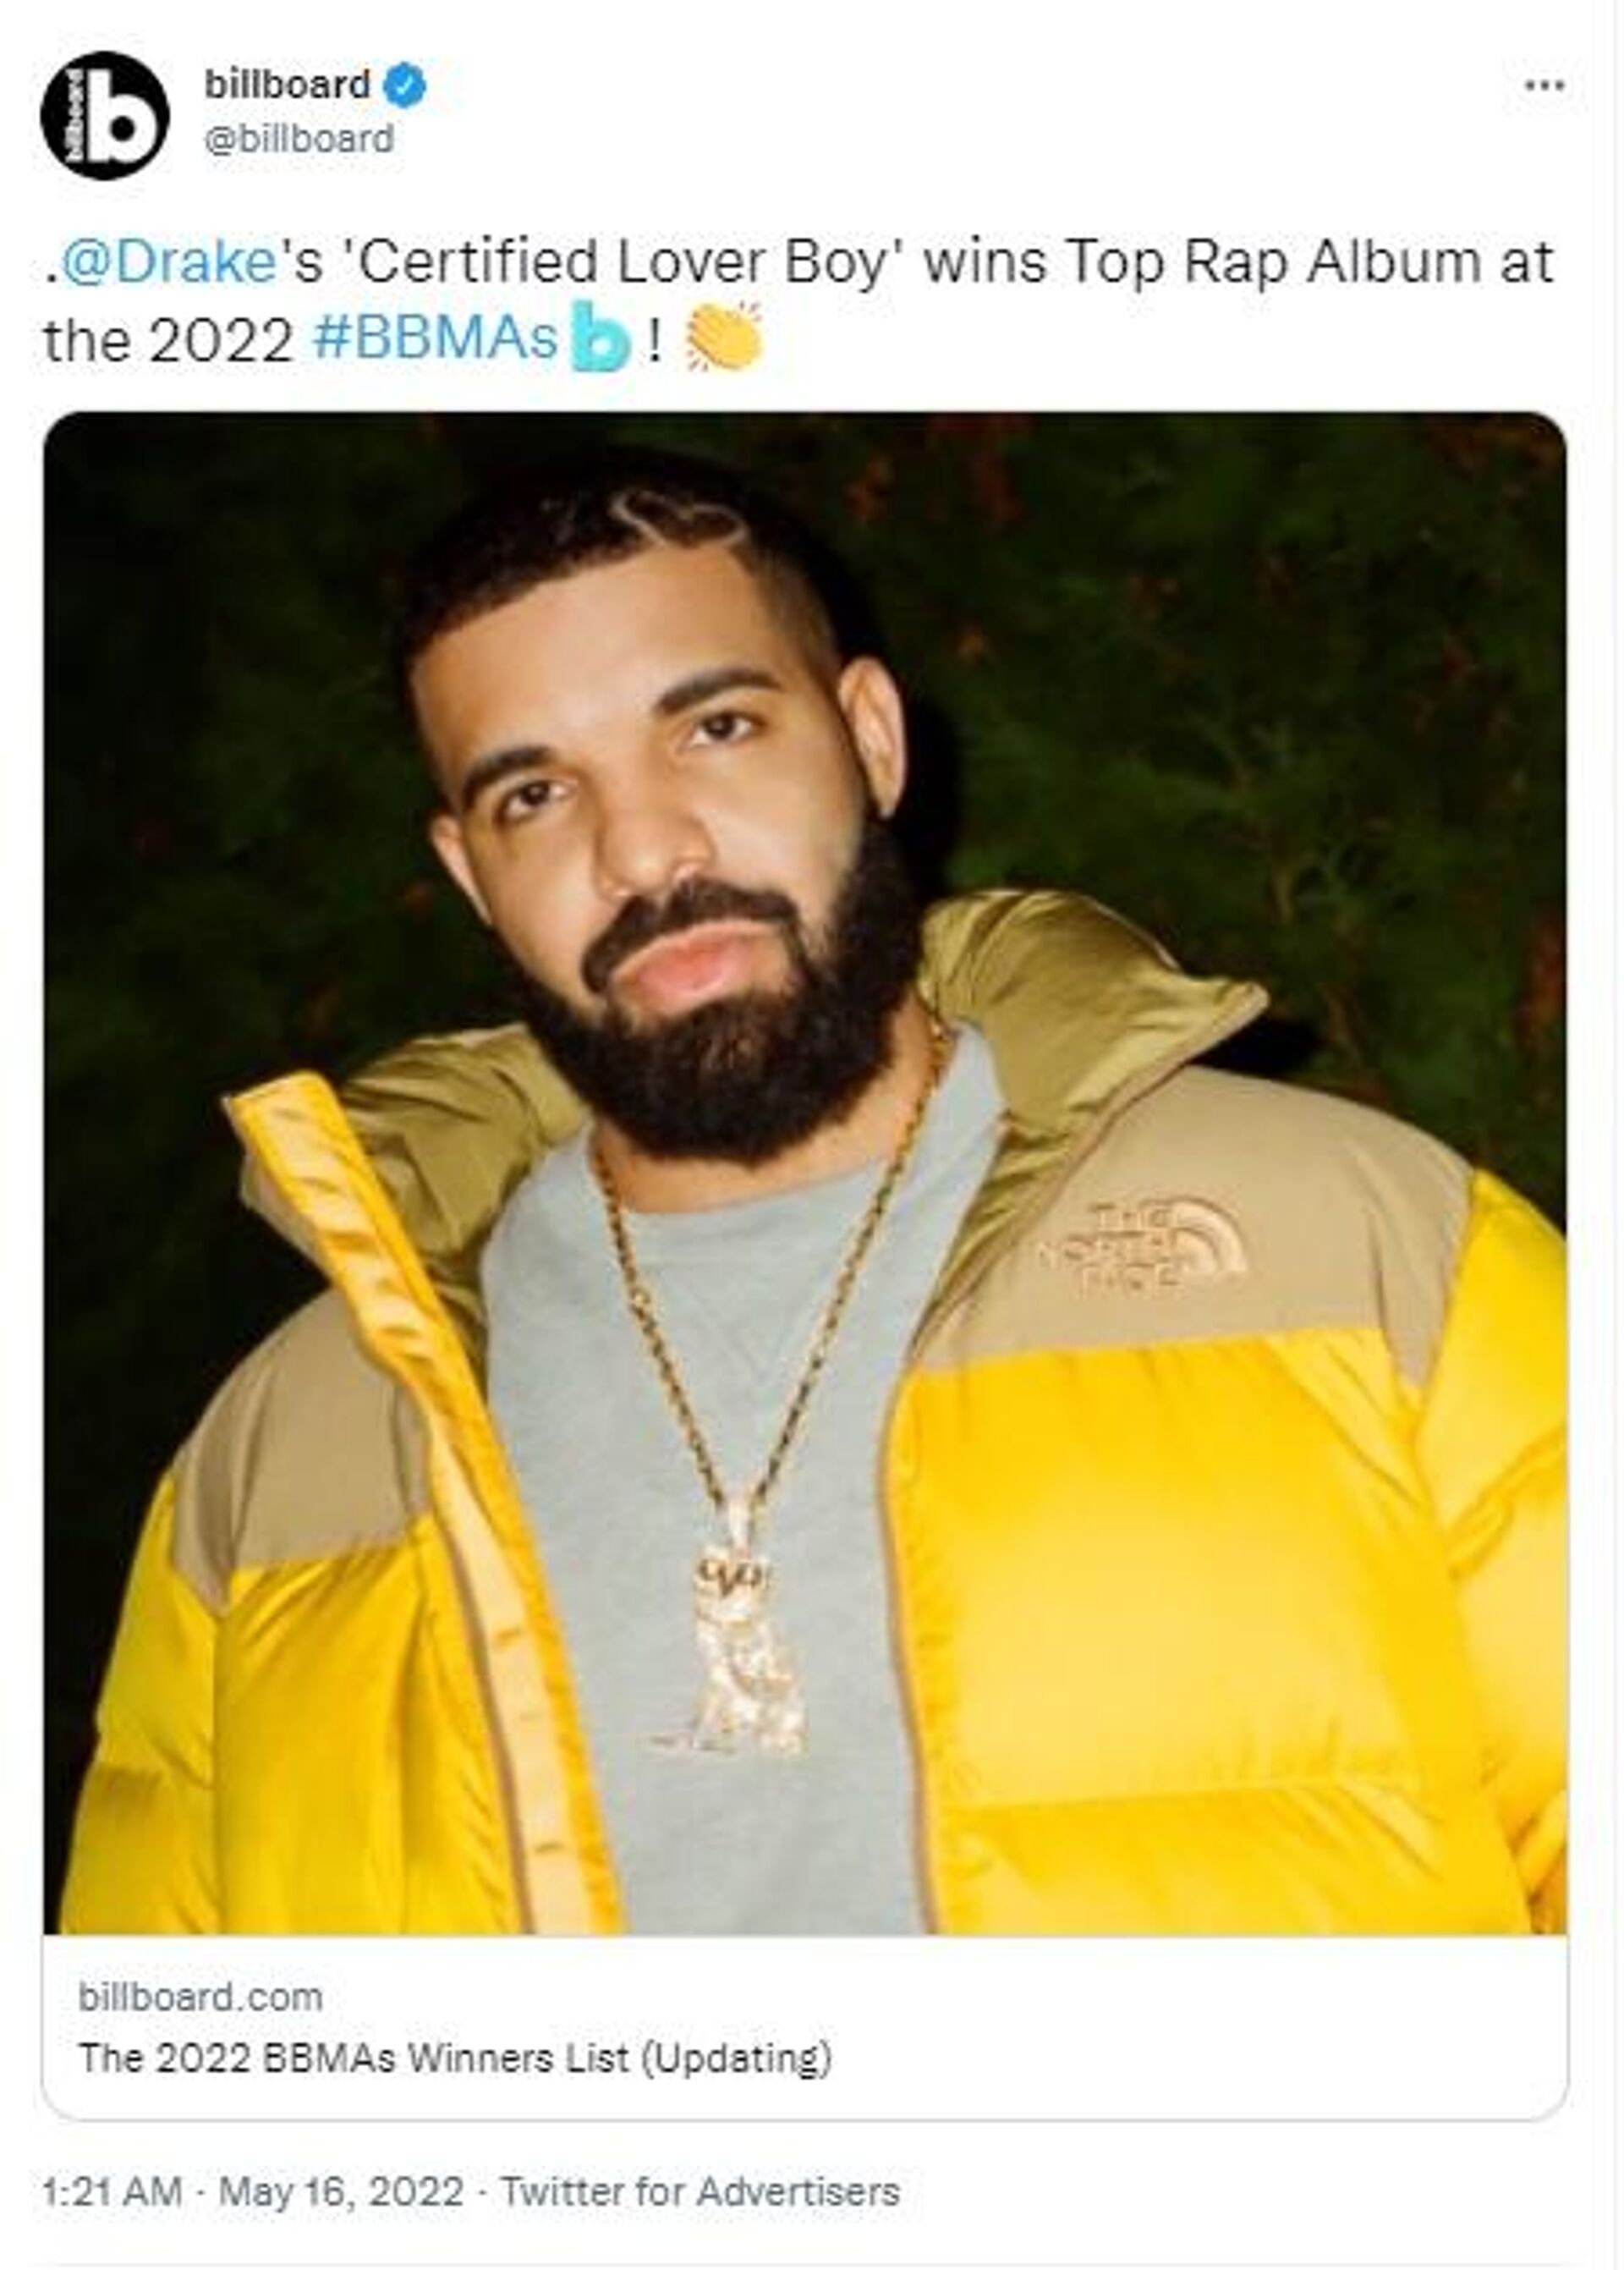 Drake's Certified Lover Boy wins Top Rap Album at Billboard Music Awards 2022 - Sputnik International, 1920, 16.05.2022